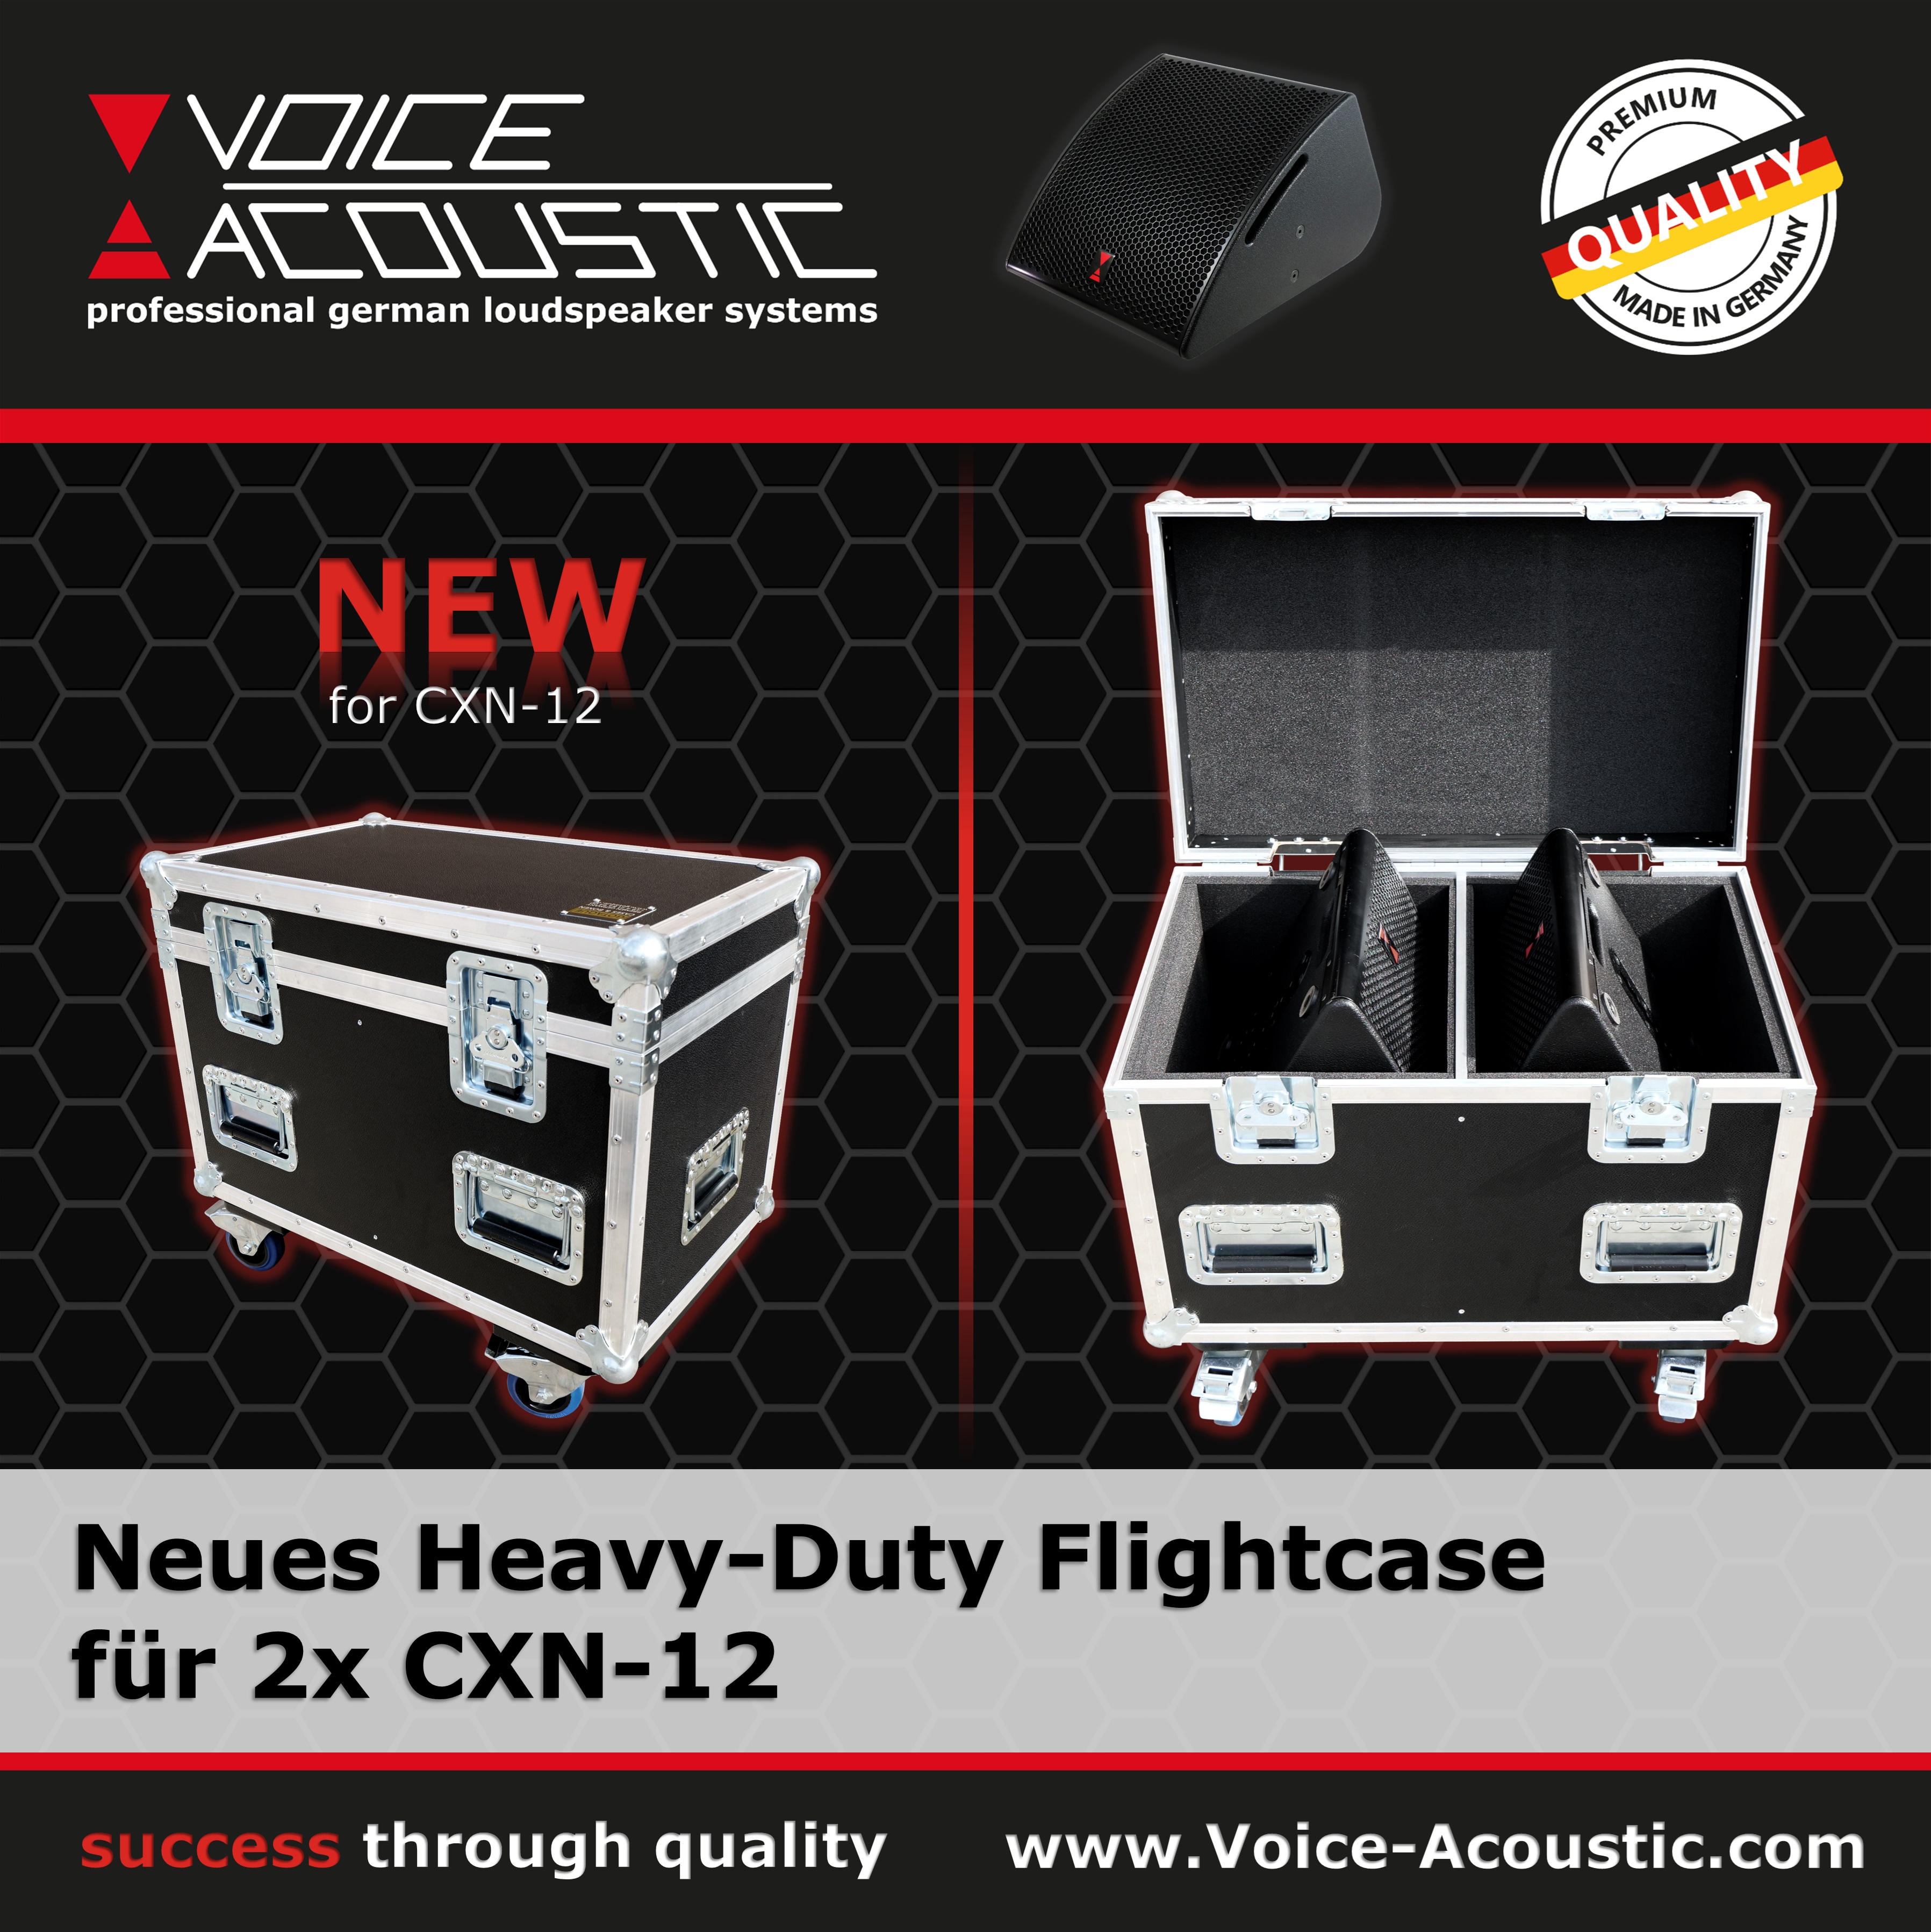 Neues Heavy-Duty Flightcase für CXN-12